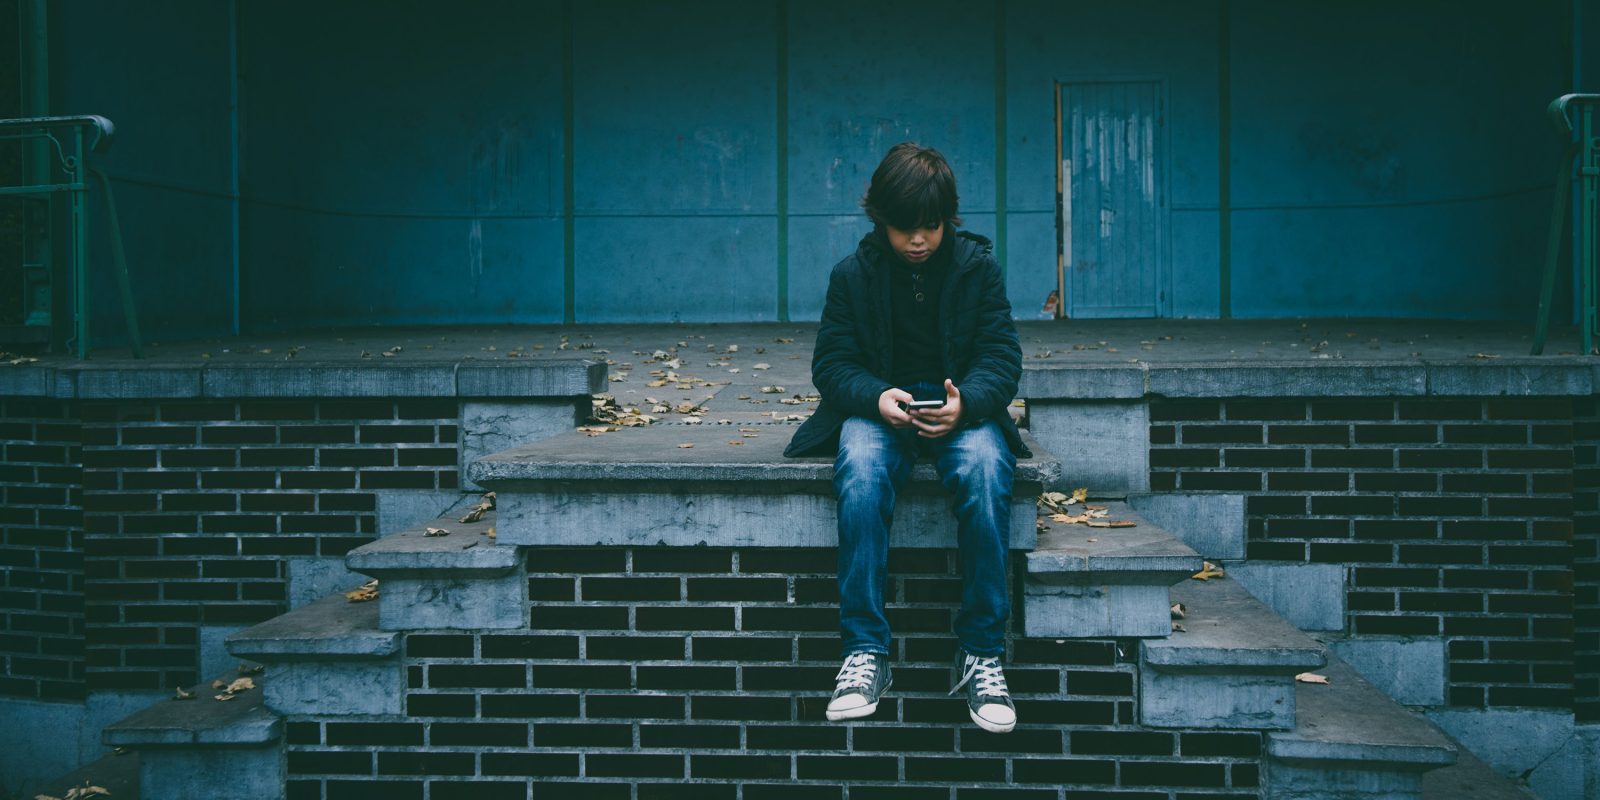 Many children under 13 use social media